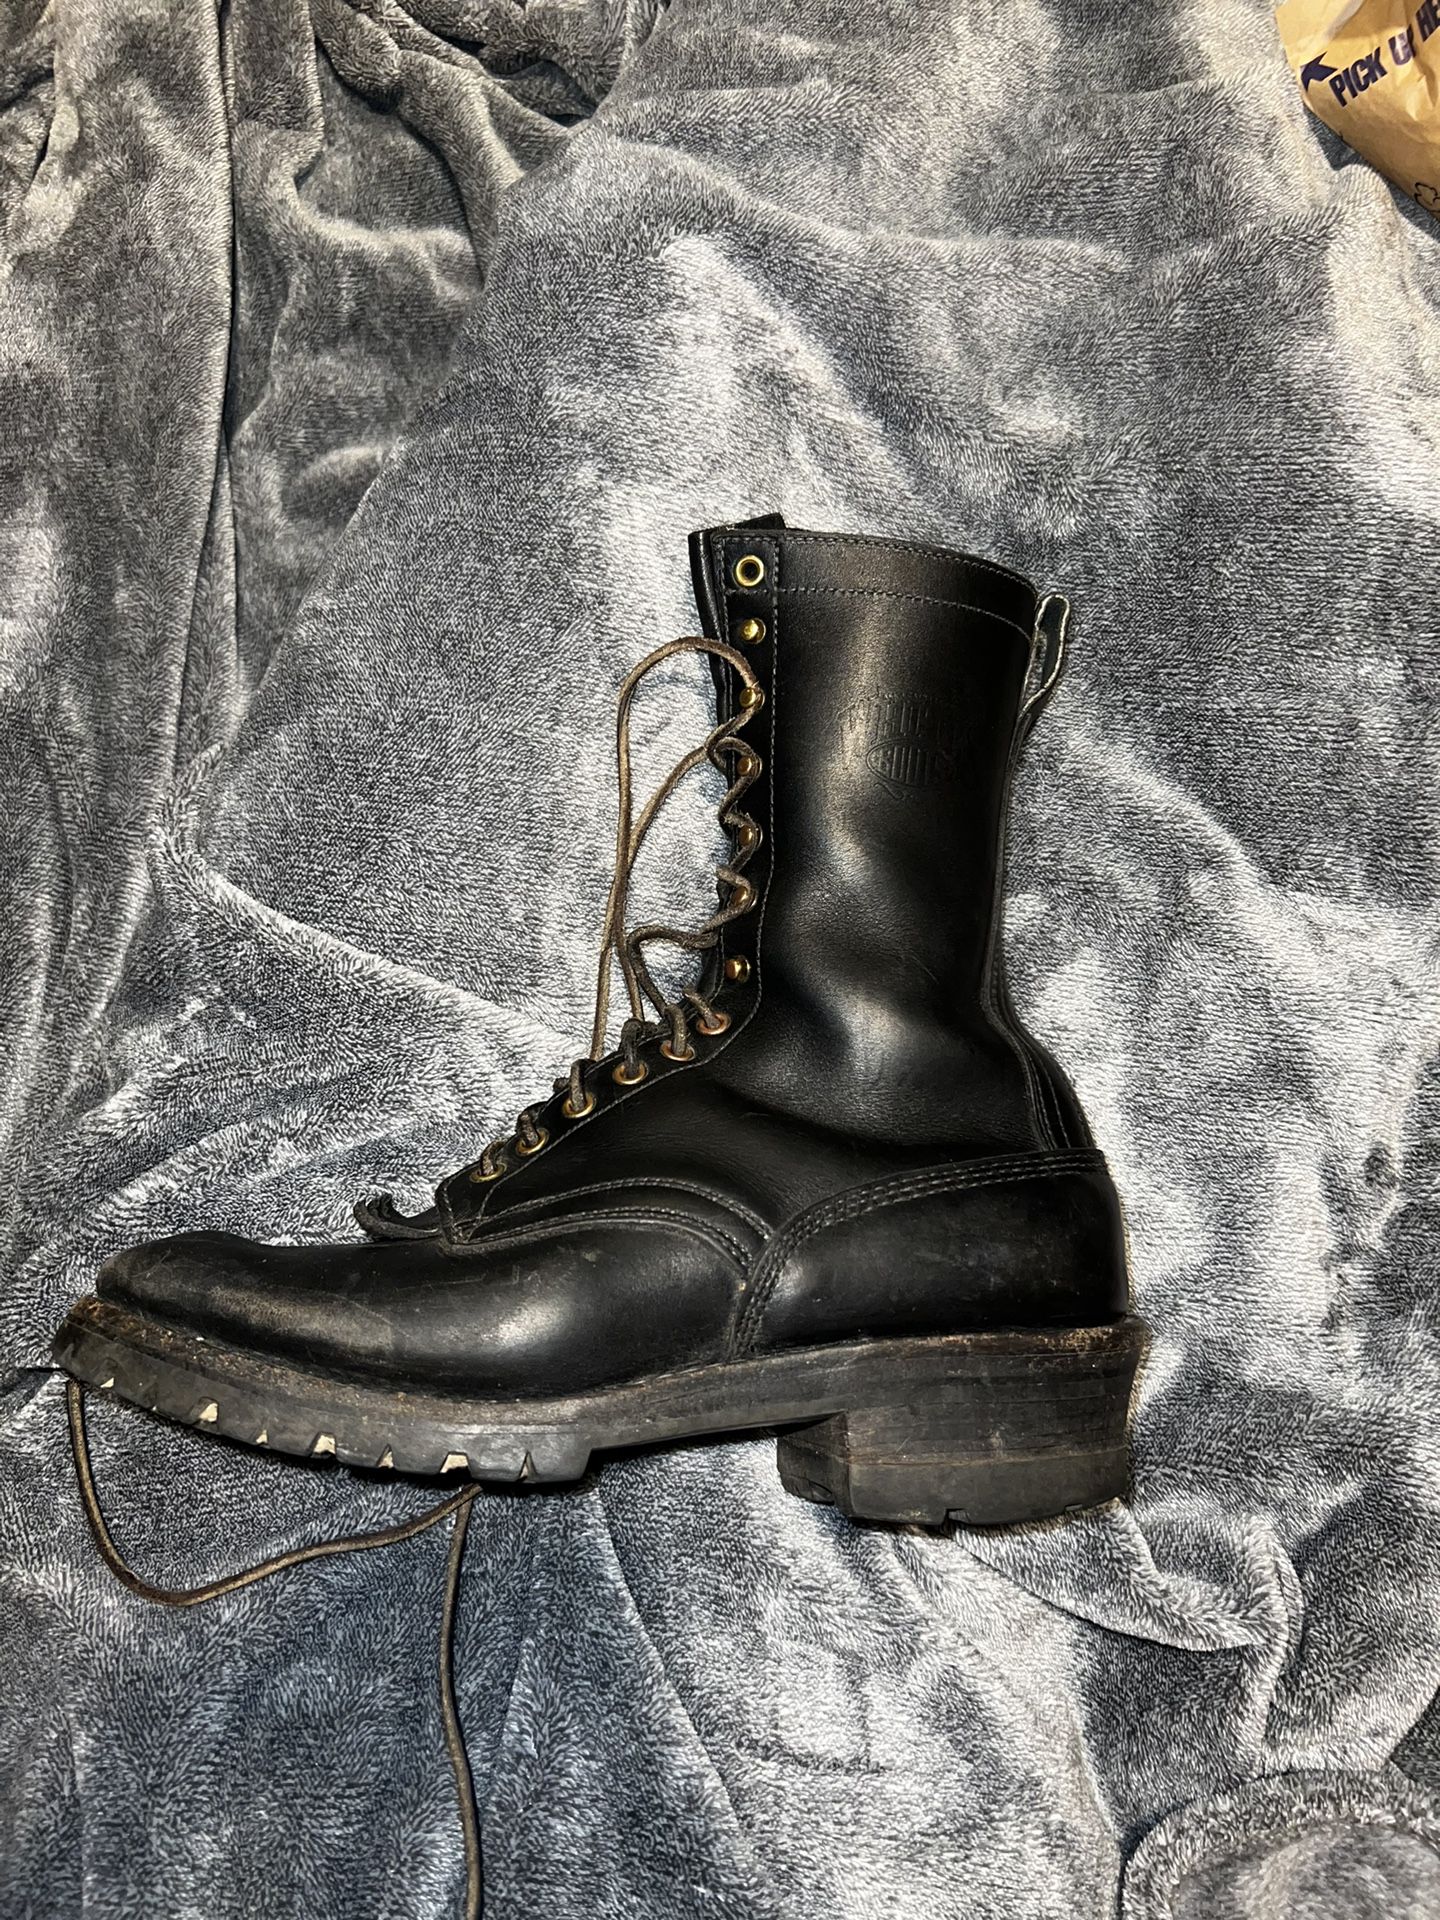 Whites boots Size 11 men’s Vibram Smoke Jumper Work Boots Soft Toe